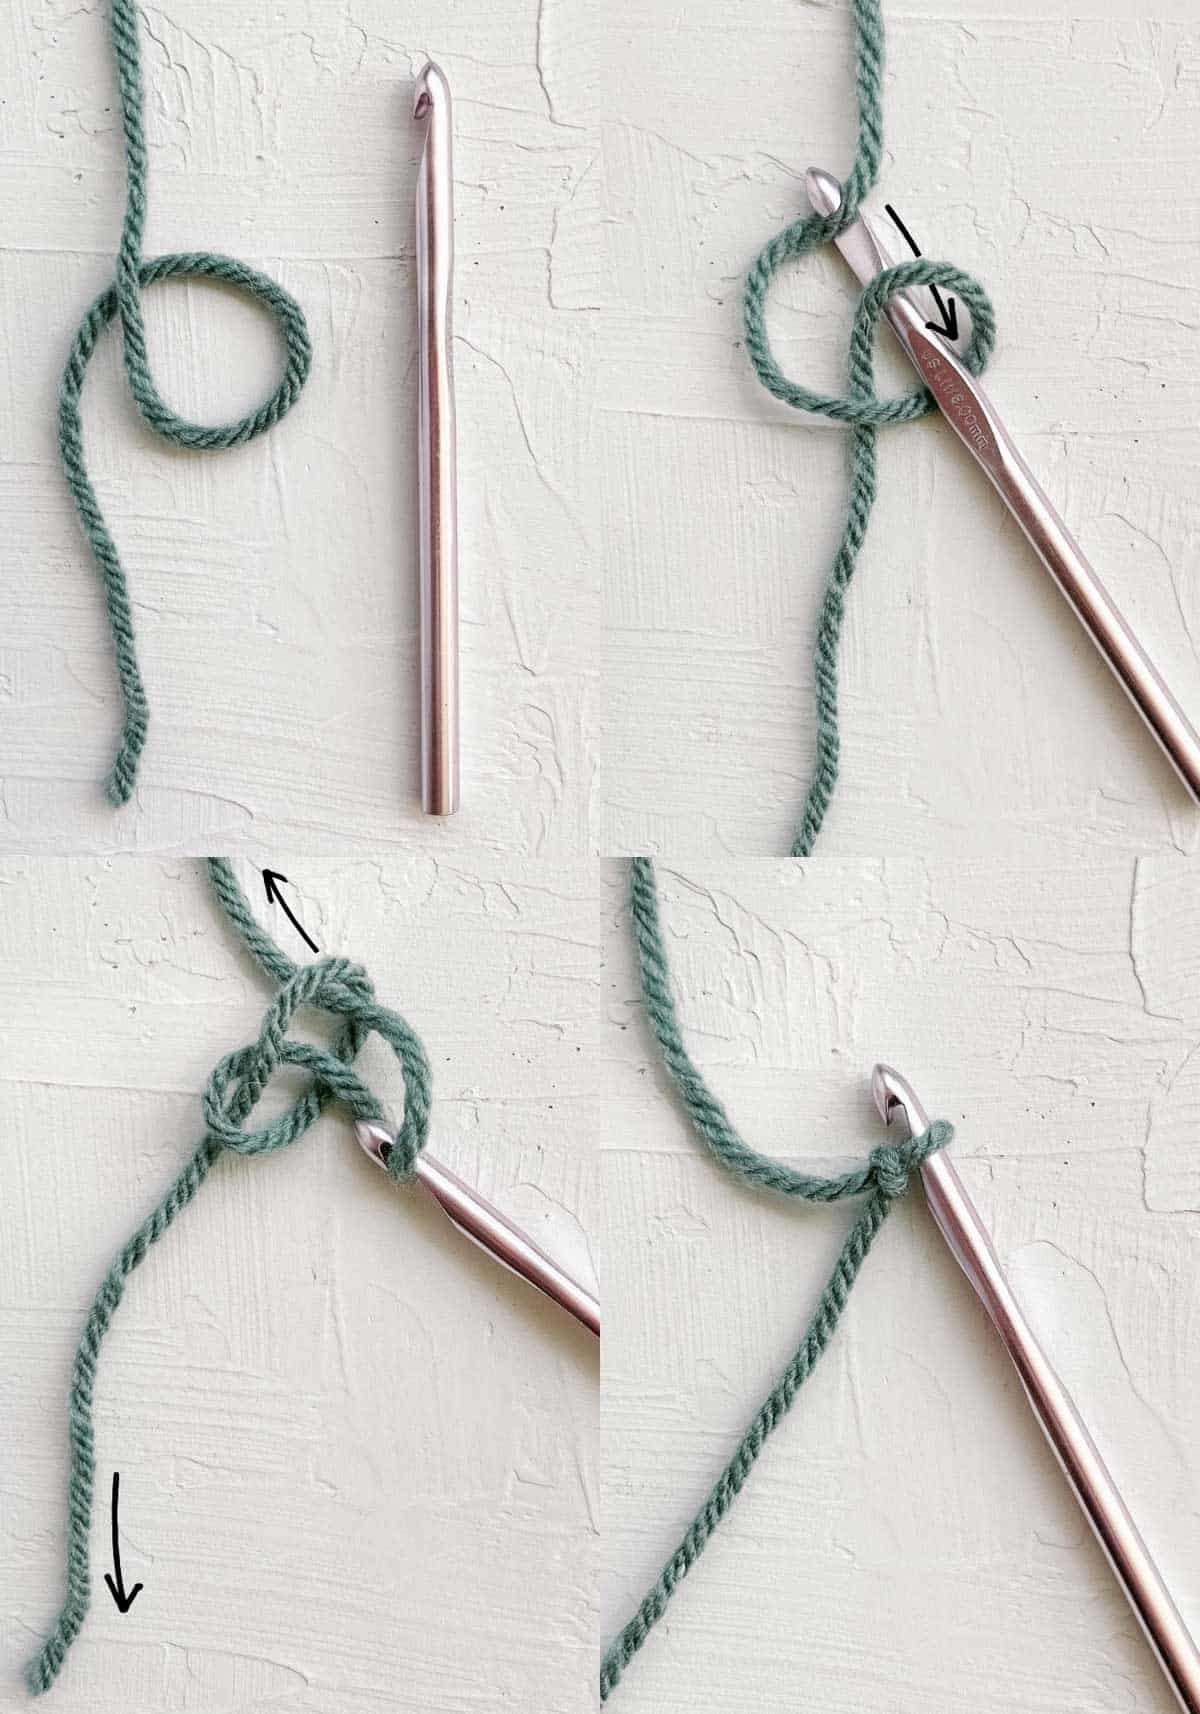 How to tie slip knot step by step tutorial.